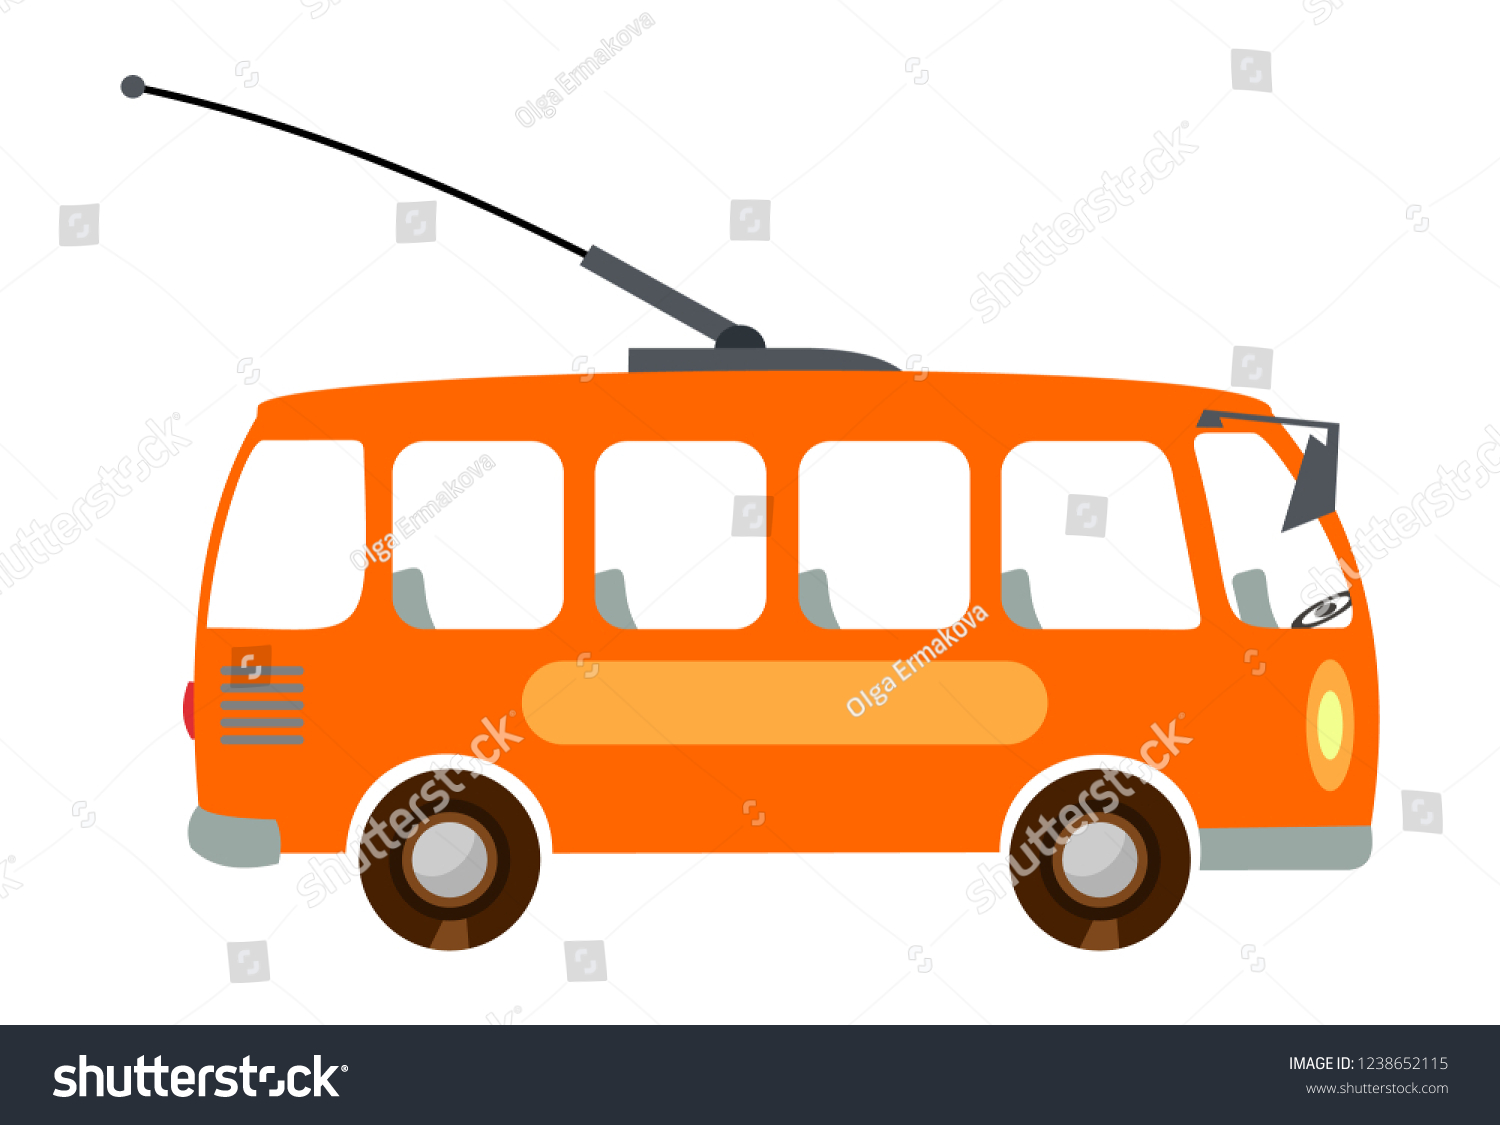 Троллейбус для дошкольников